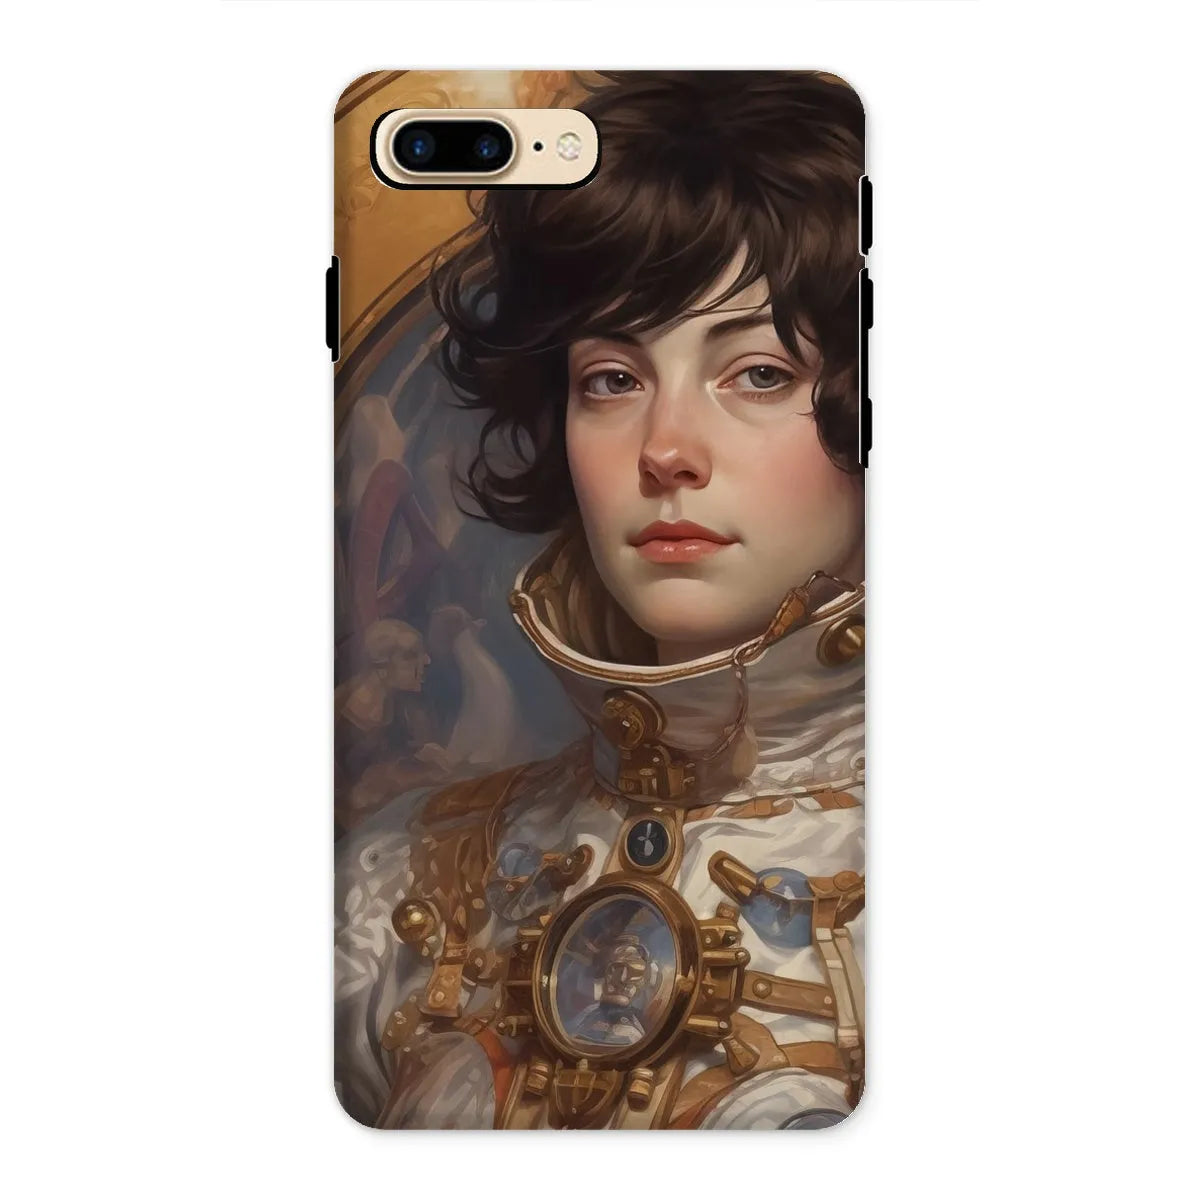 Chloé The Lesbian Astronaut - Space Aesthetic Art Phone Case - Iphone 8 Plus / Matte - Mobile Phone Cases - Aesthetic